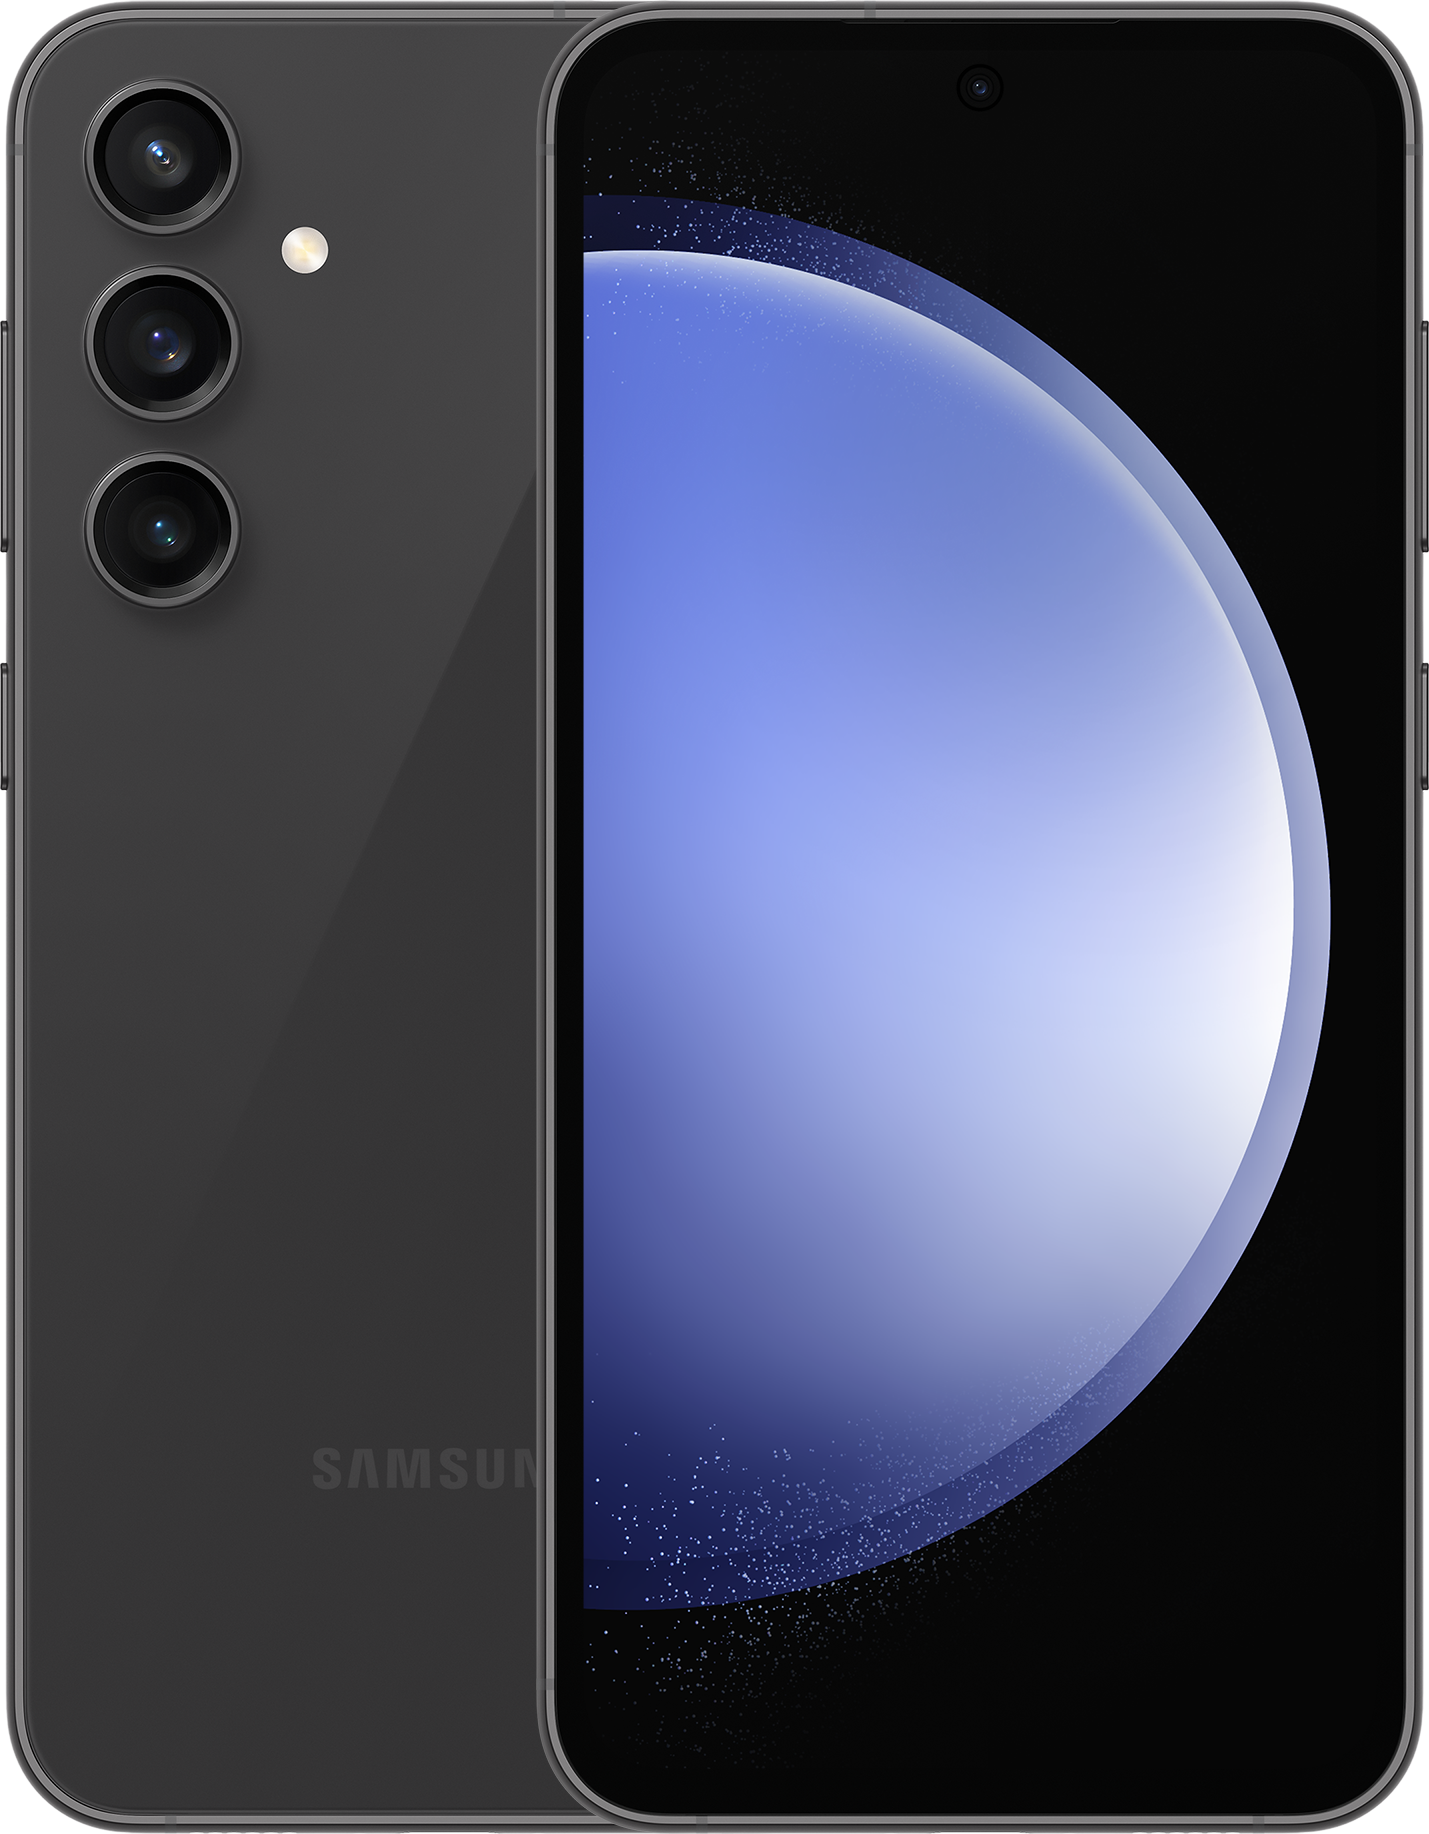 Смартфон Samsung Galaxy S23 FE